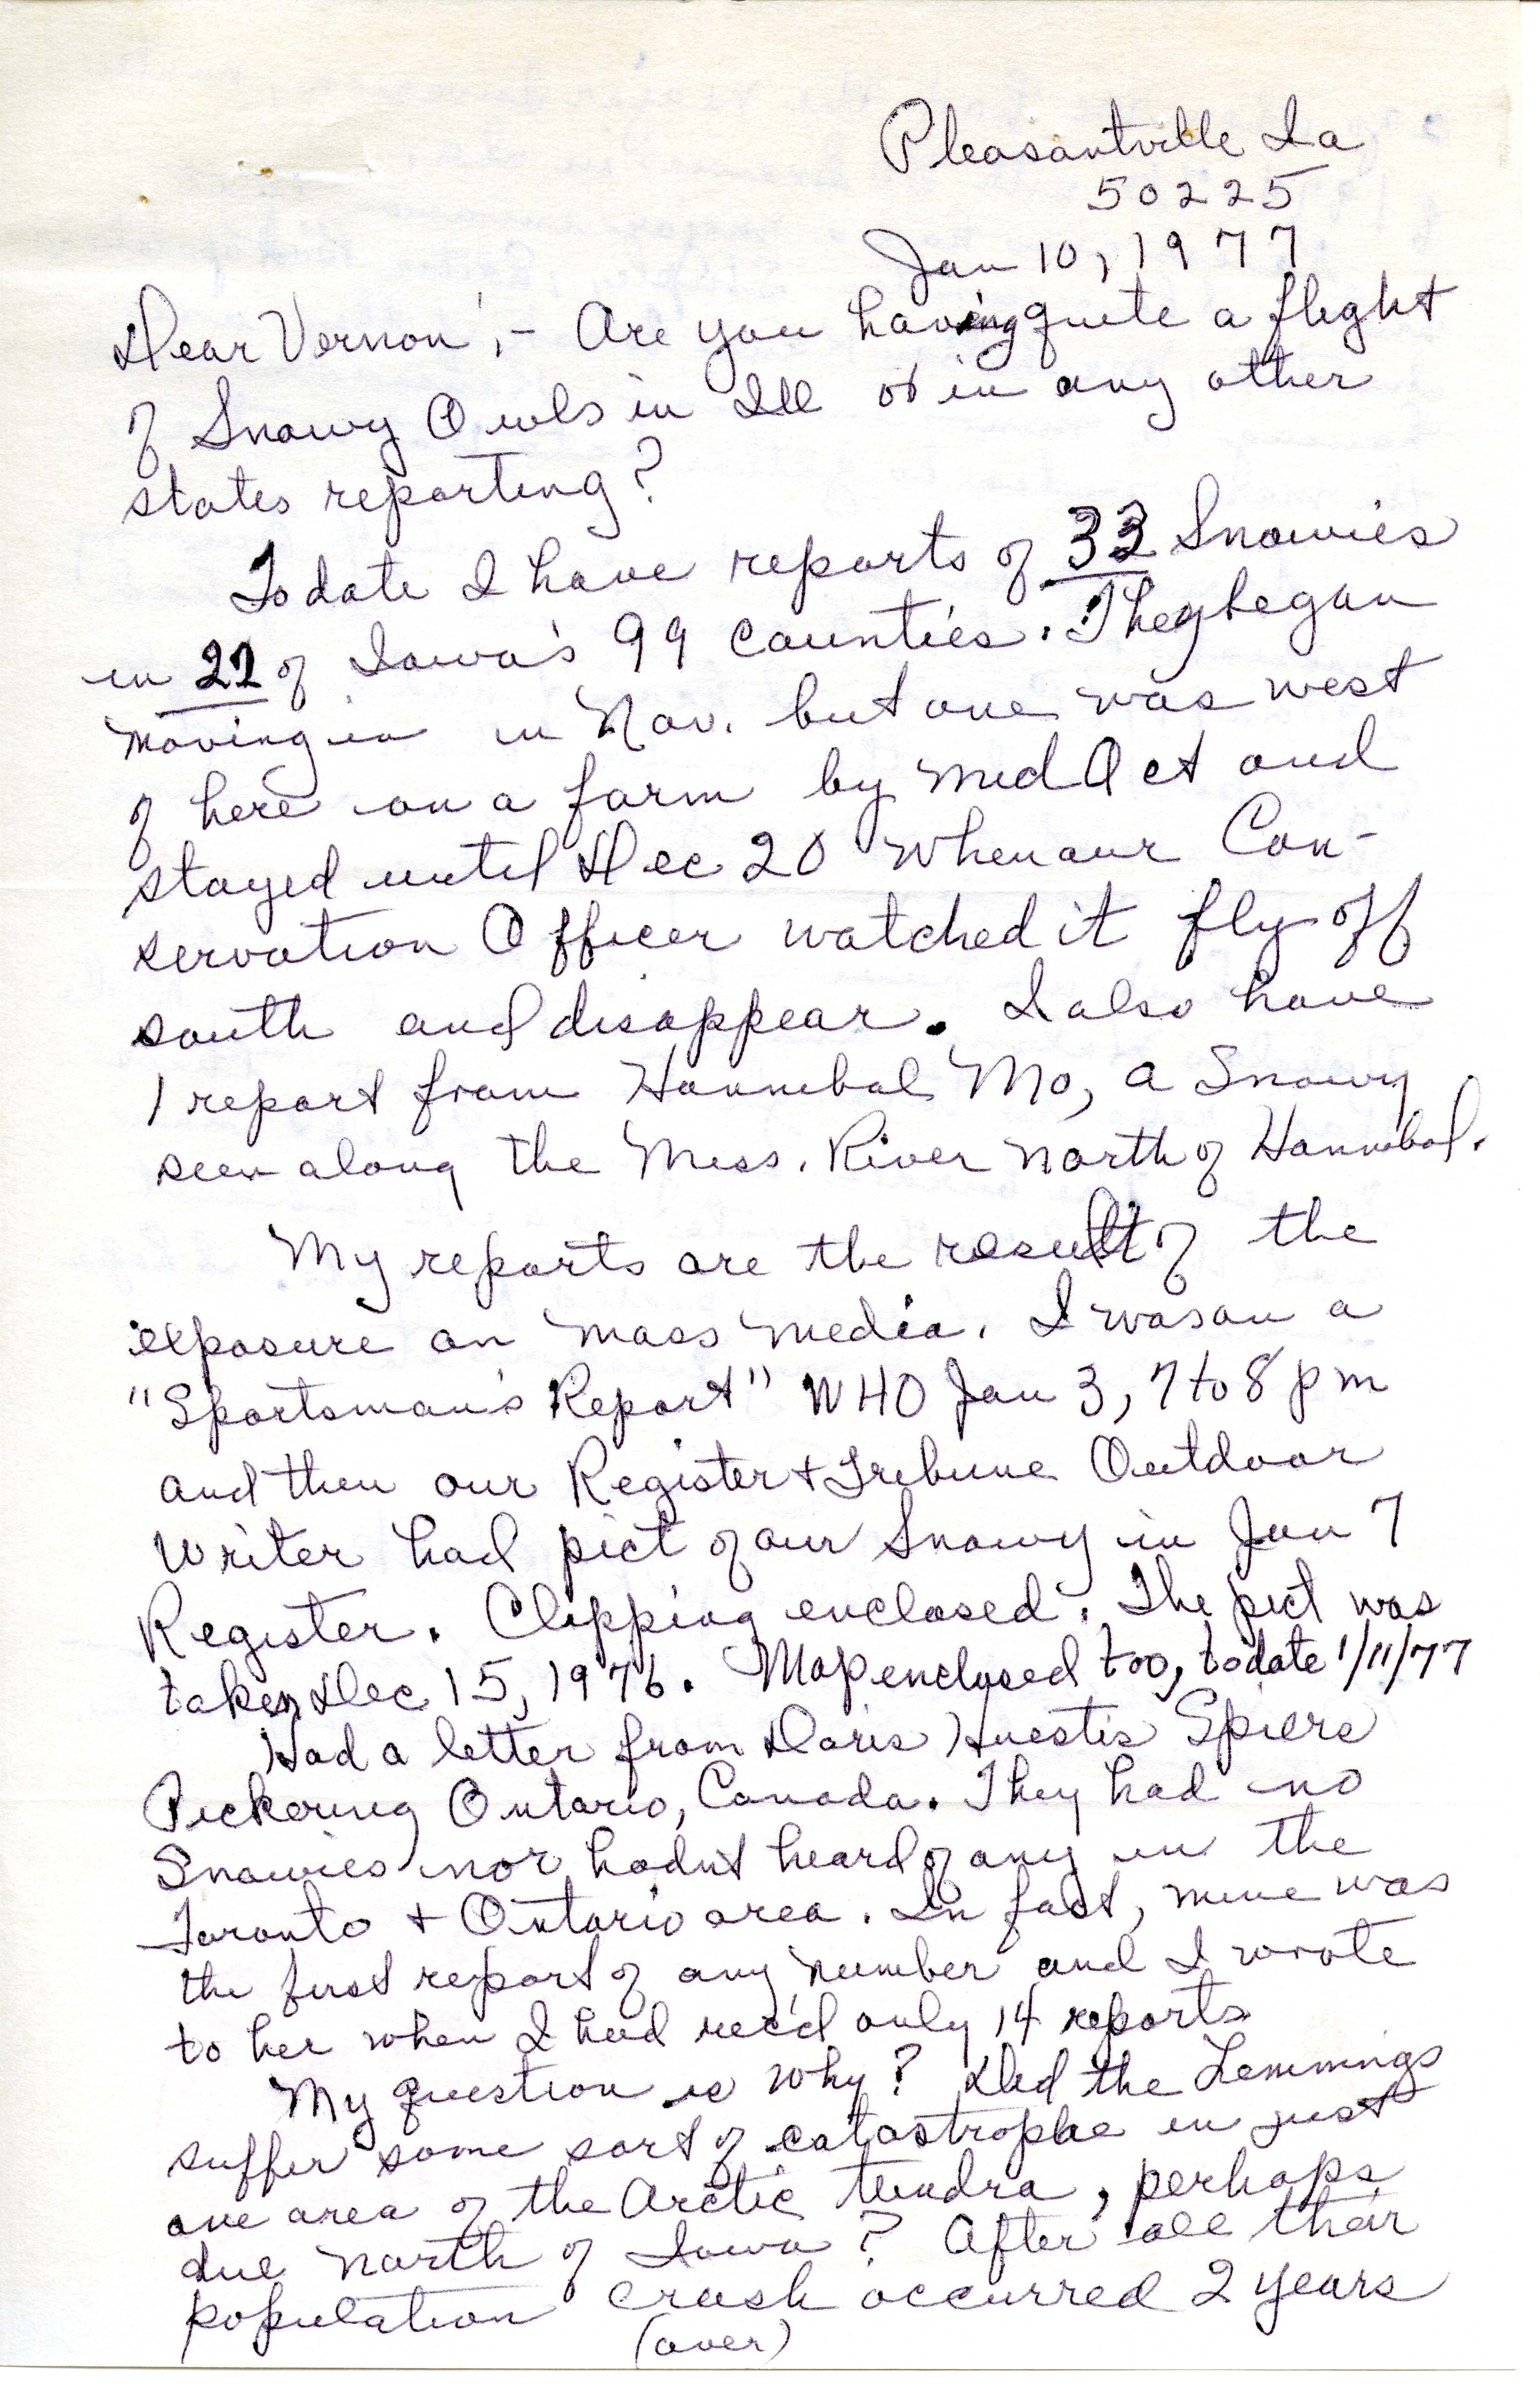 Gladys Black letter to Vernon M. Kleen regarding bird sightings, January 10, 1977